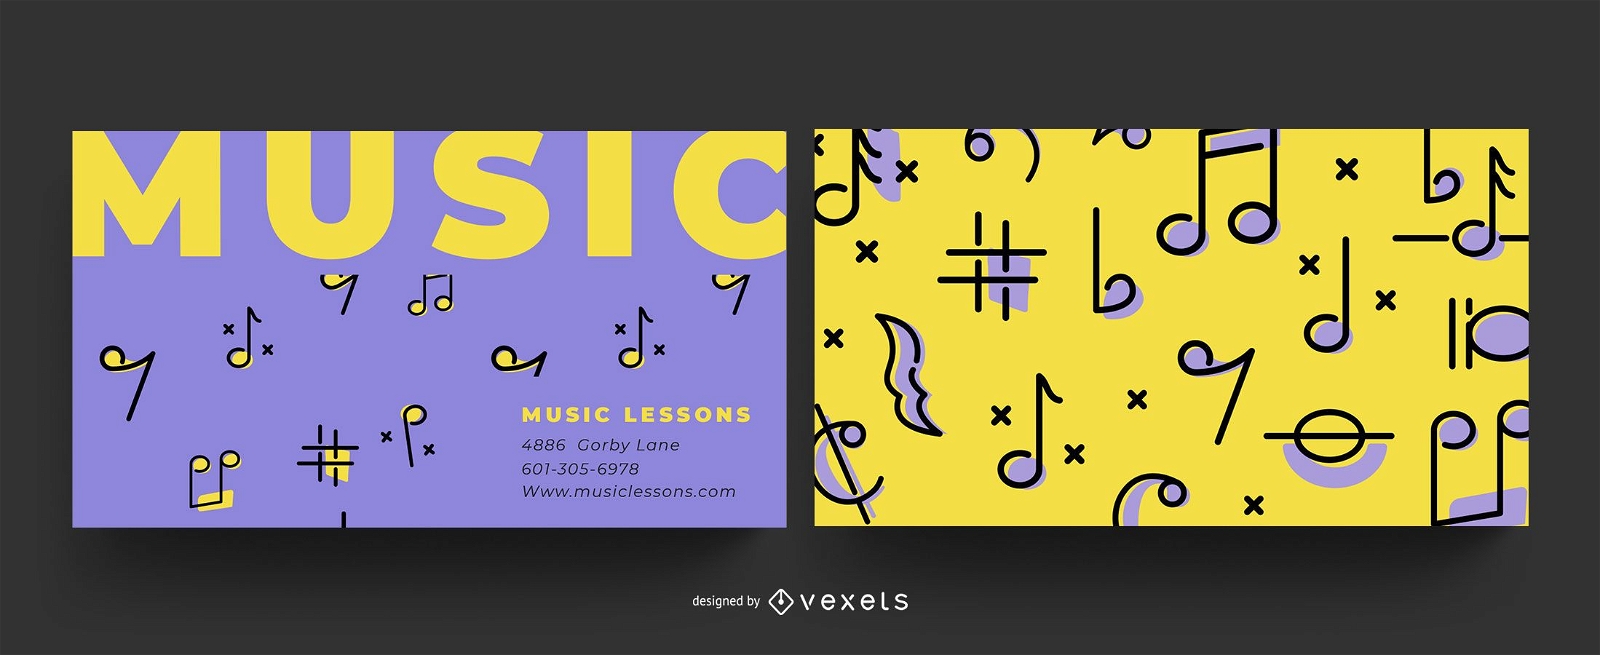 Music business card design